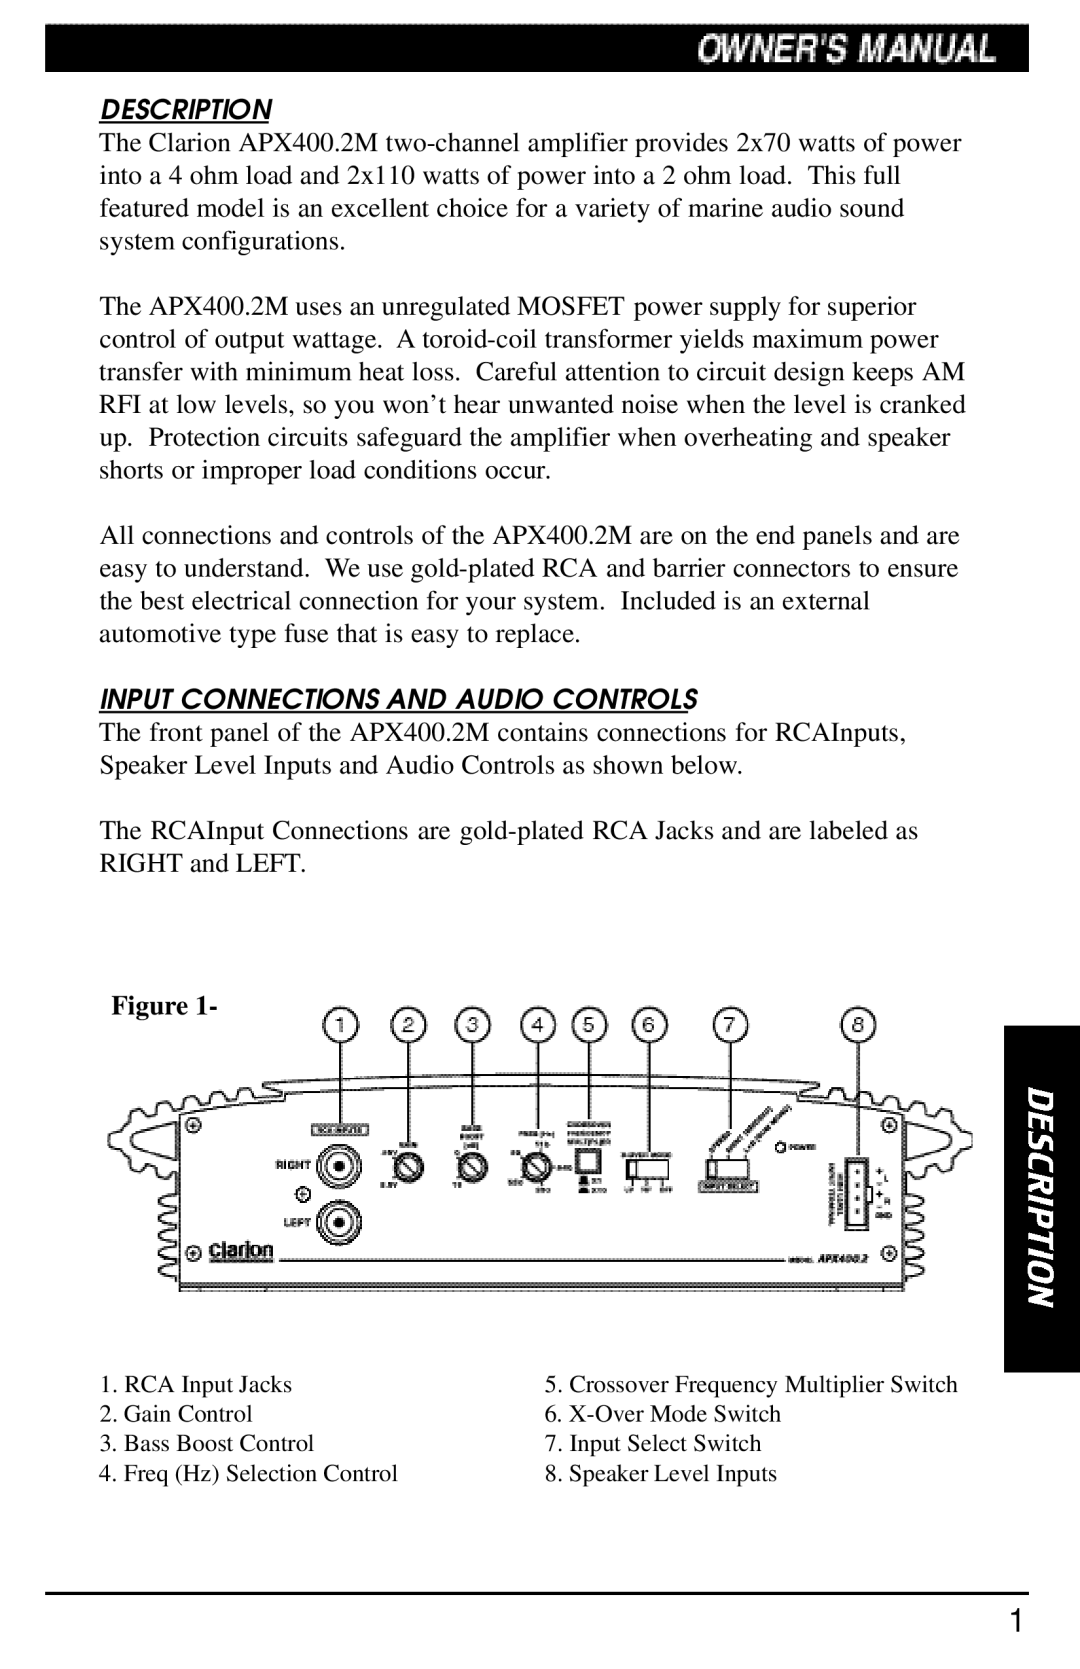 Clarion APX400.2M manual Description, Input Connections And Audio Controls 